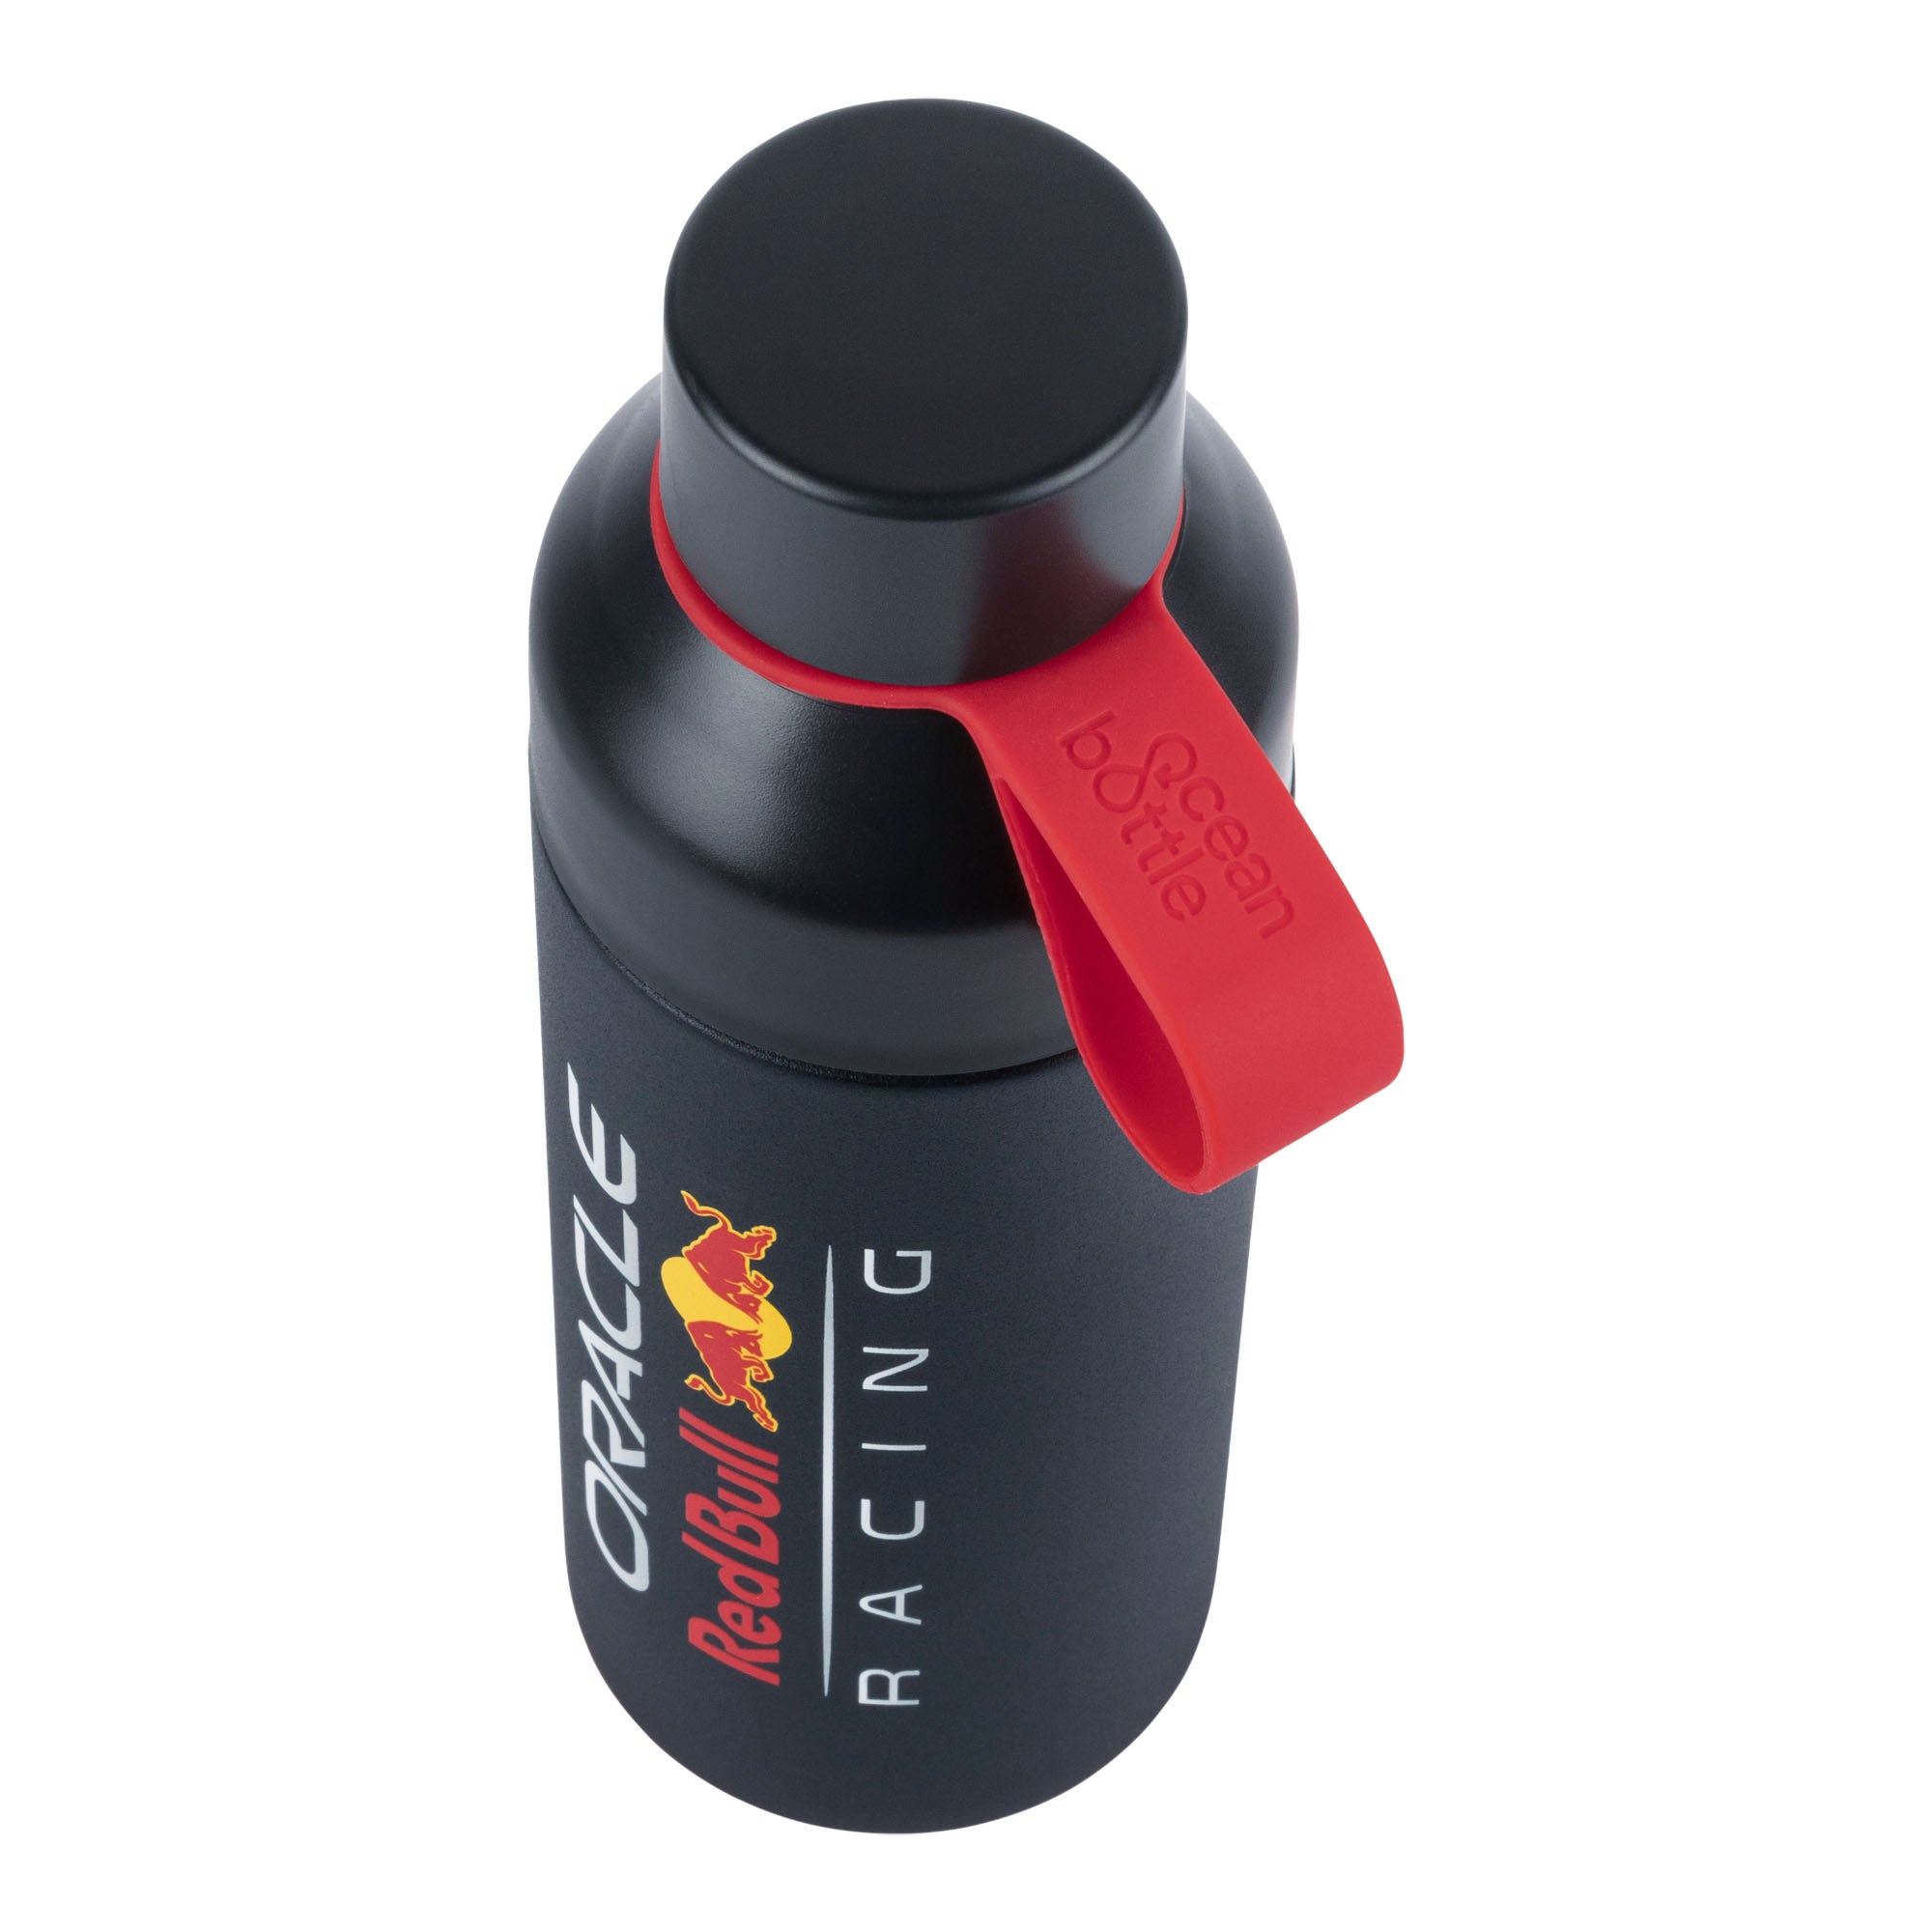 Yeti - Oracle Red Bull Racing Partner